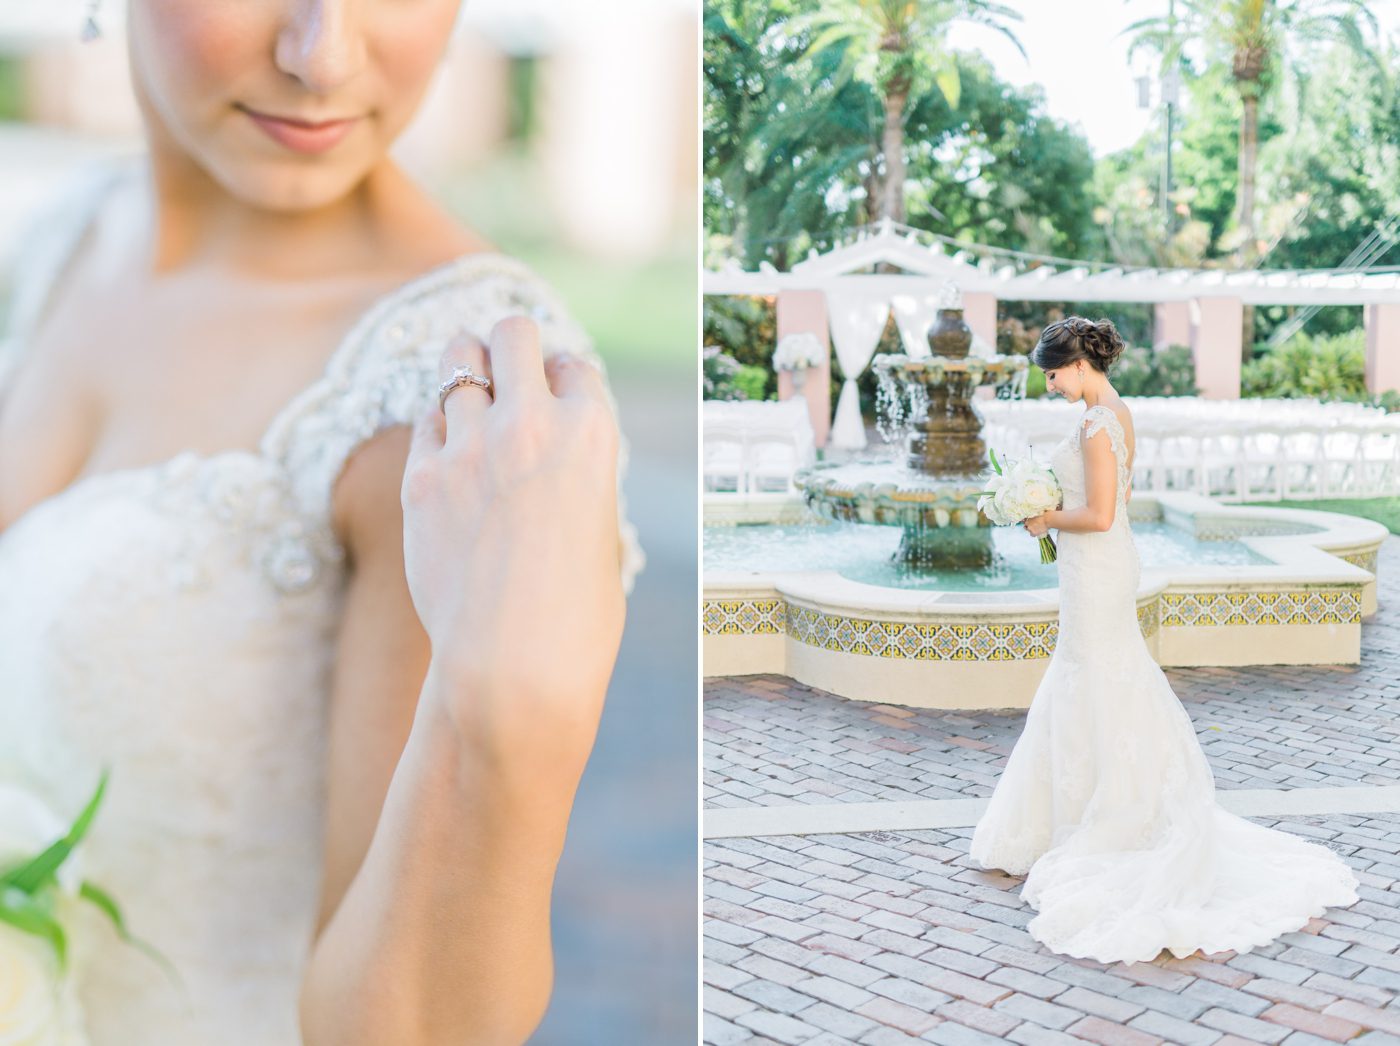 Vinoy tea garden bridal photos | Vinoy renaissance wedding photos | St Petersburg FL wedding photographersCatherine Ann Photography